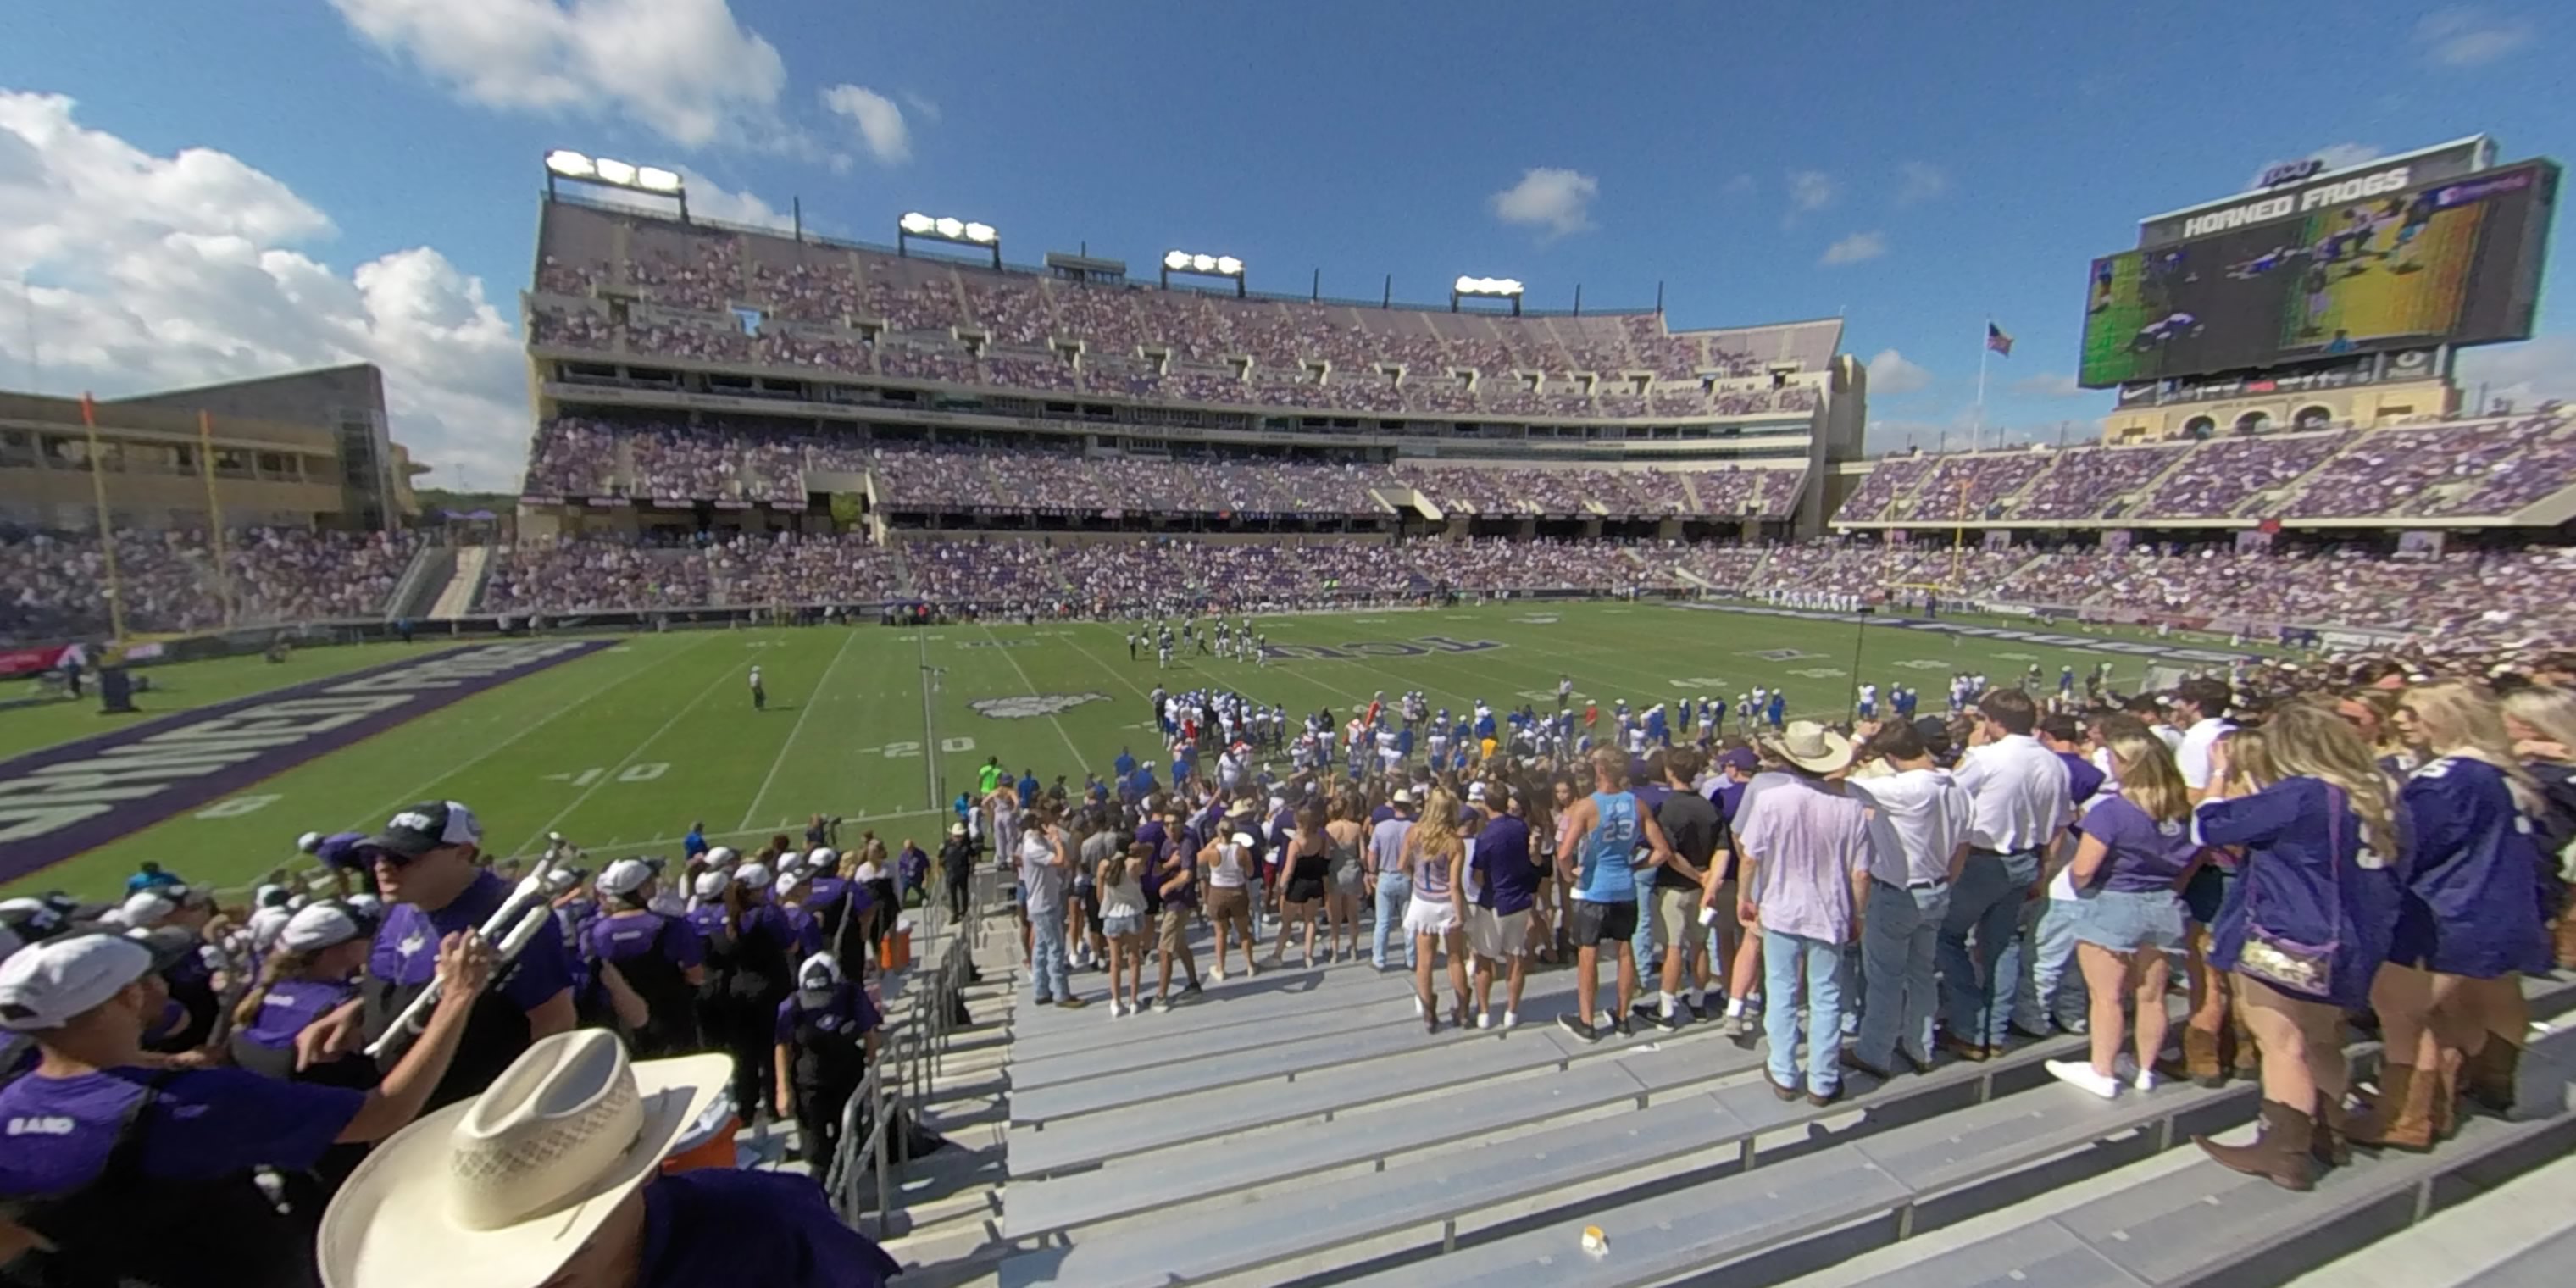 section 126 panoramic seat view  - amon carter stadium